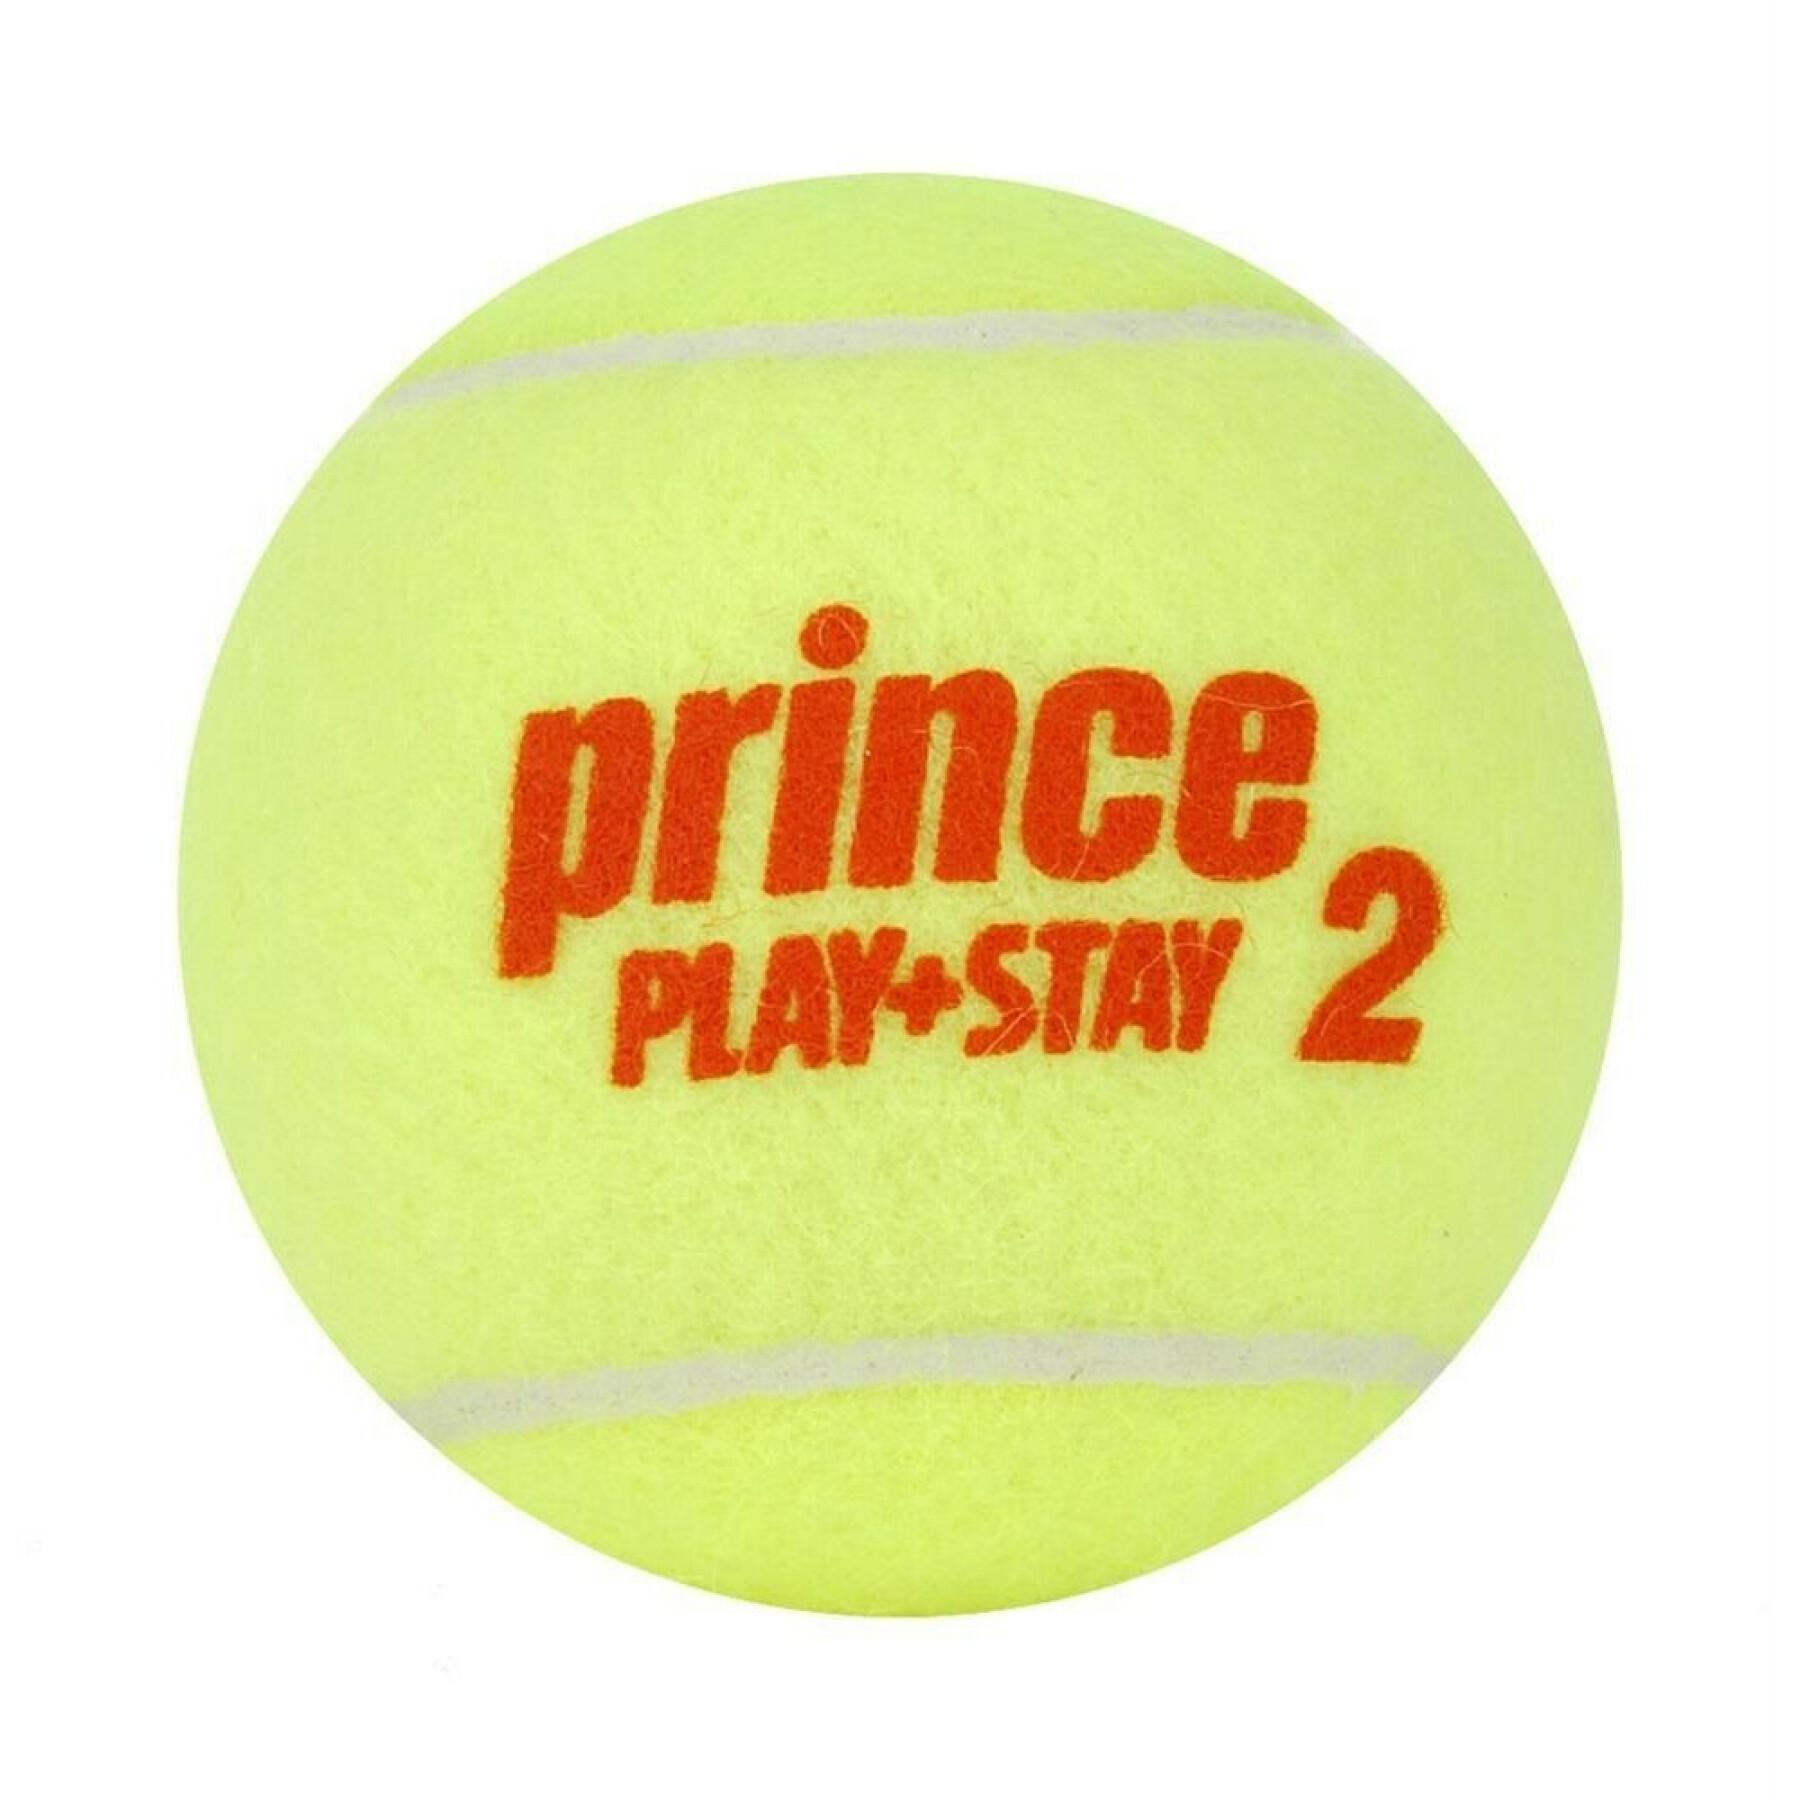 Tube de 3 balles de tennis Prince Play & Stay - stage 2